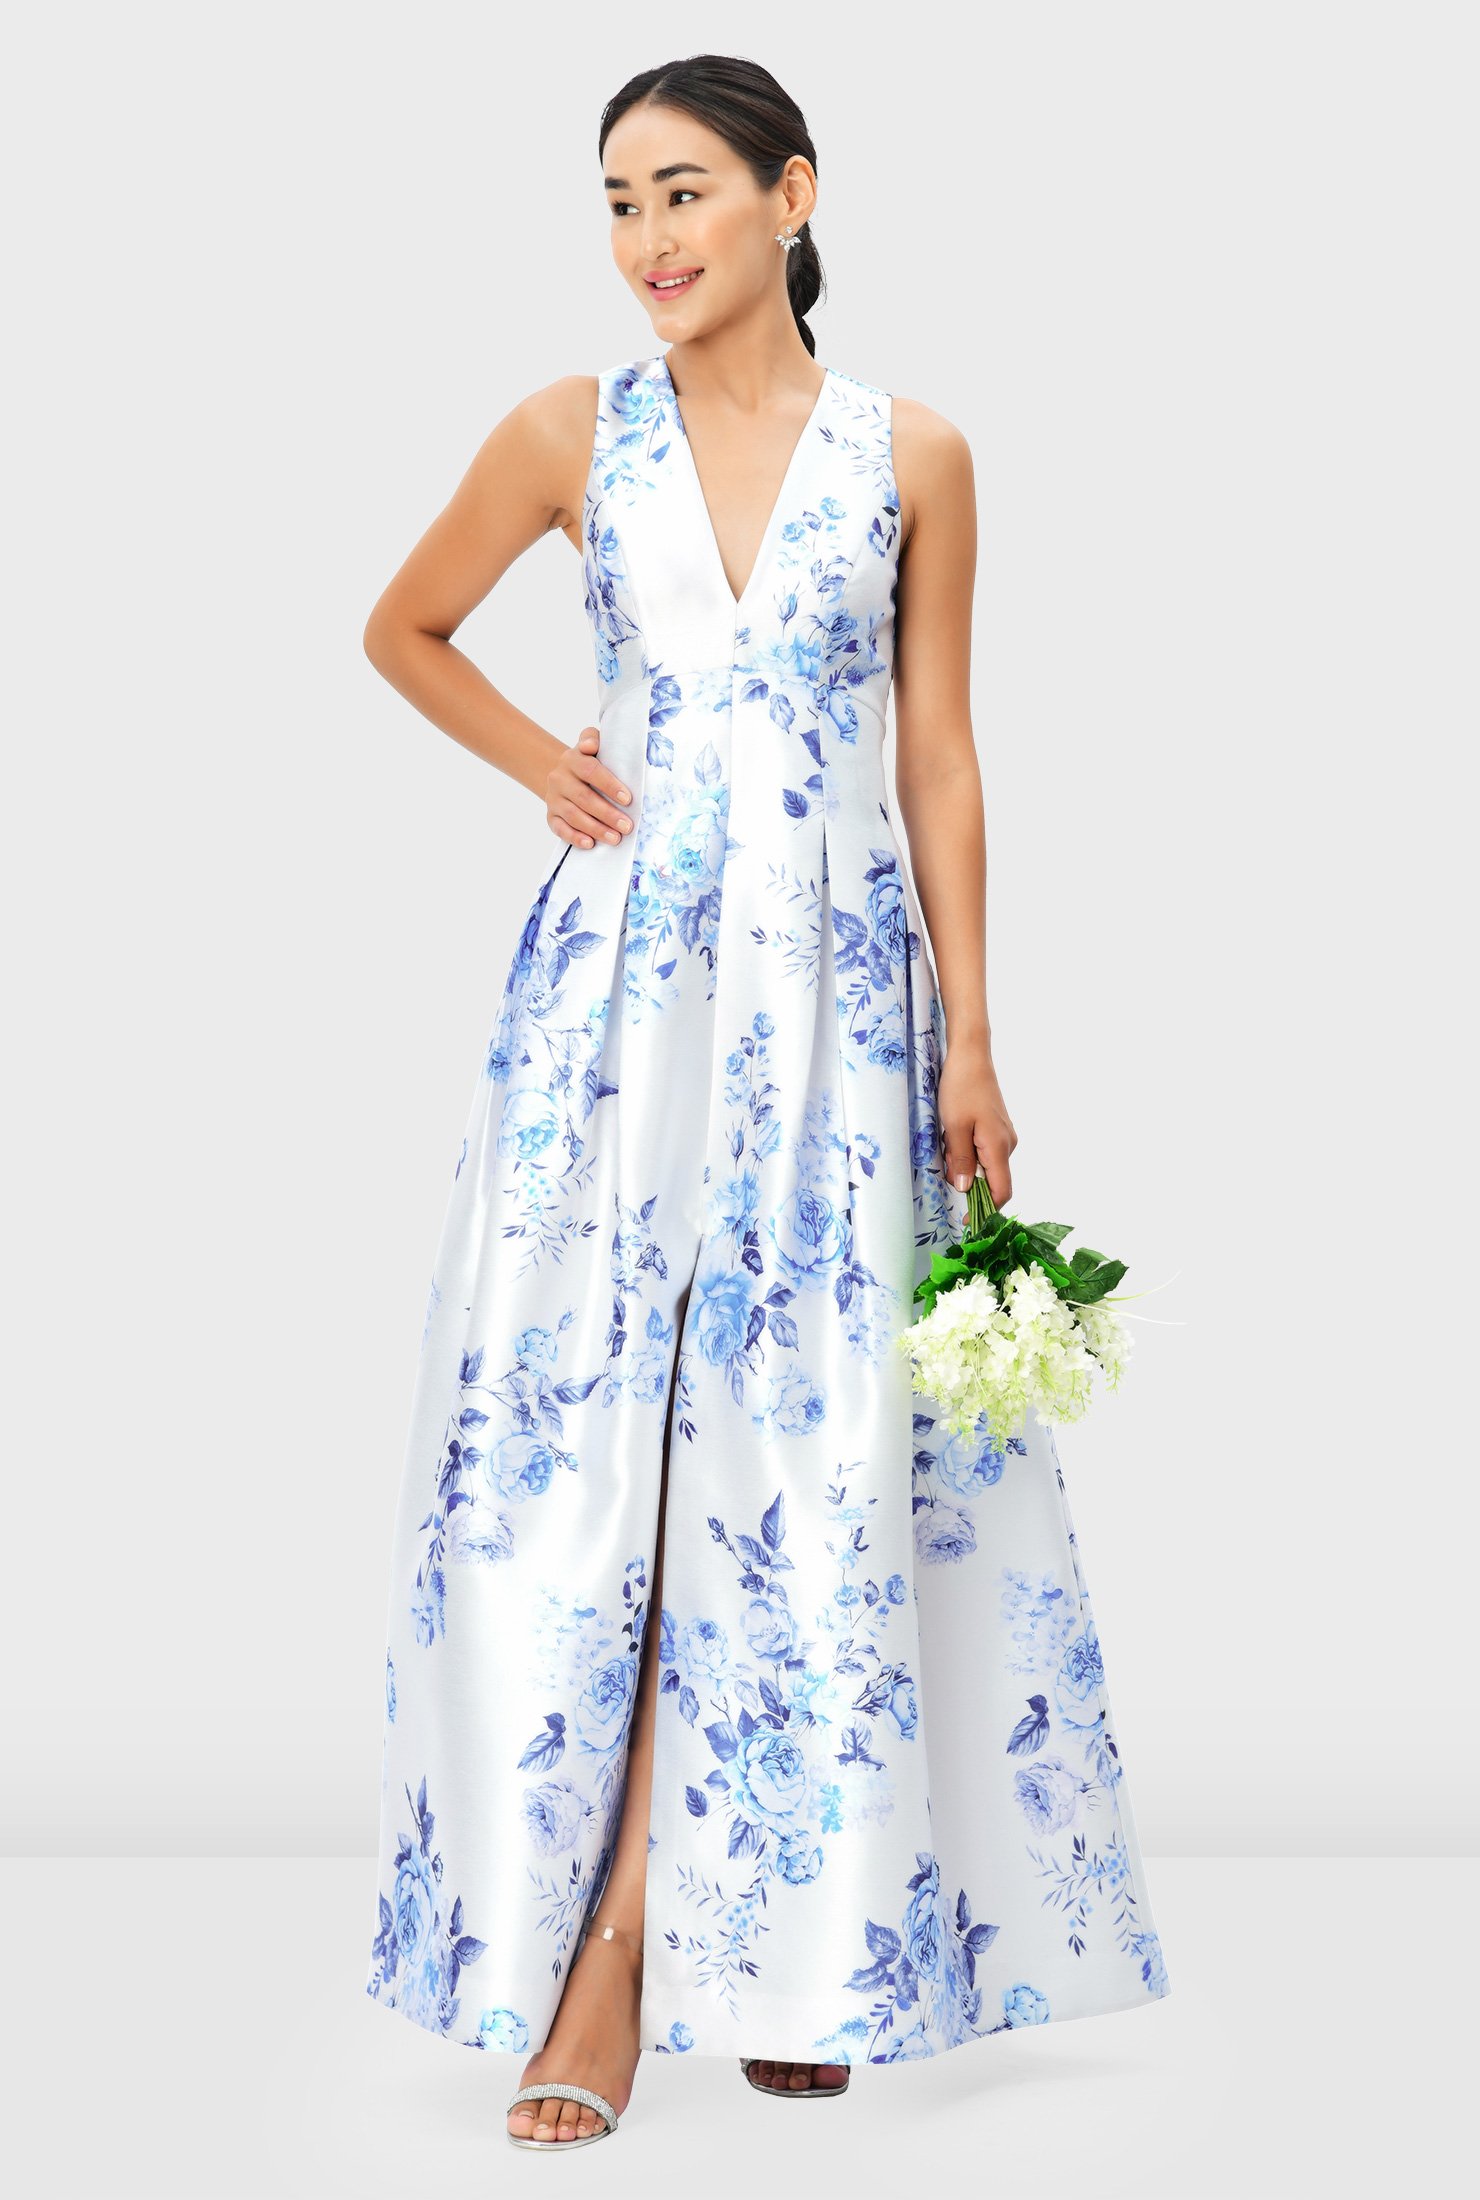 Shop Floral print poly dupioni release pleat empire dress | eShakti